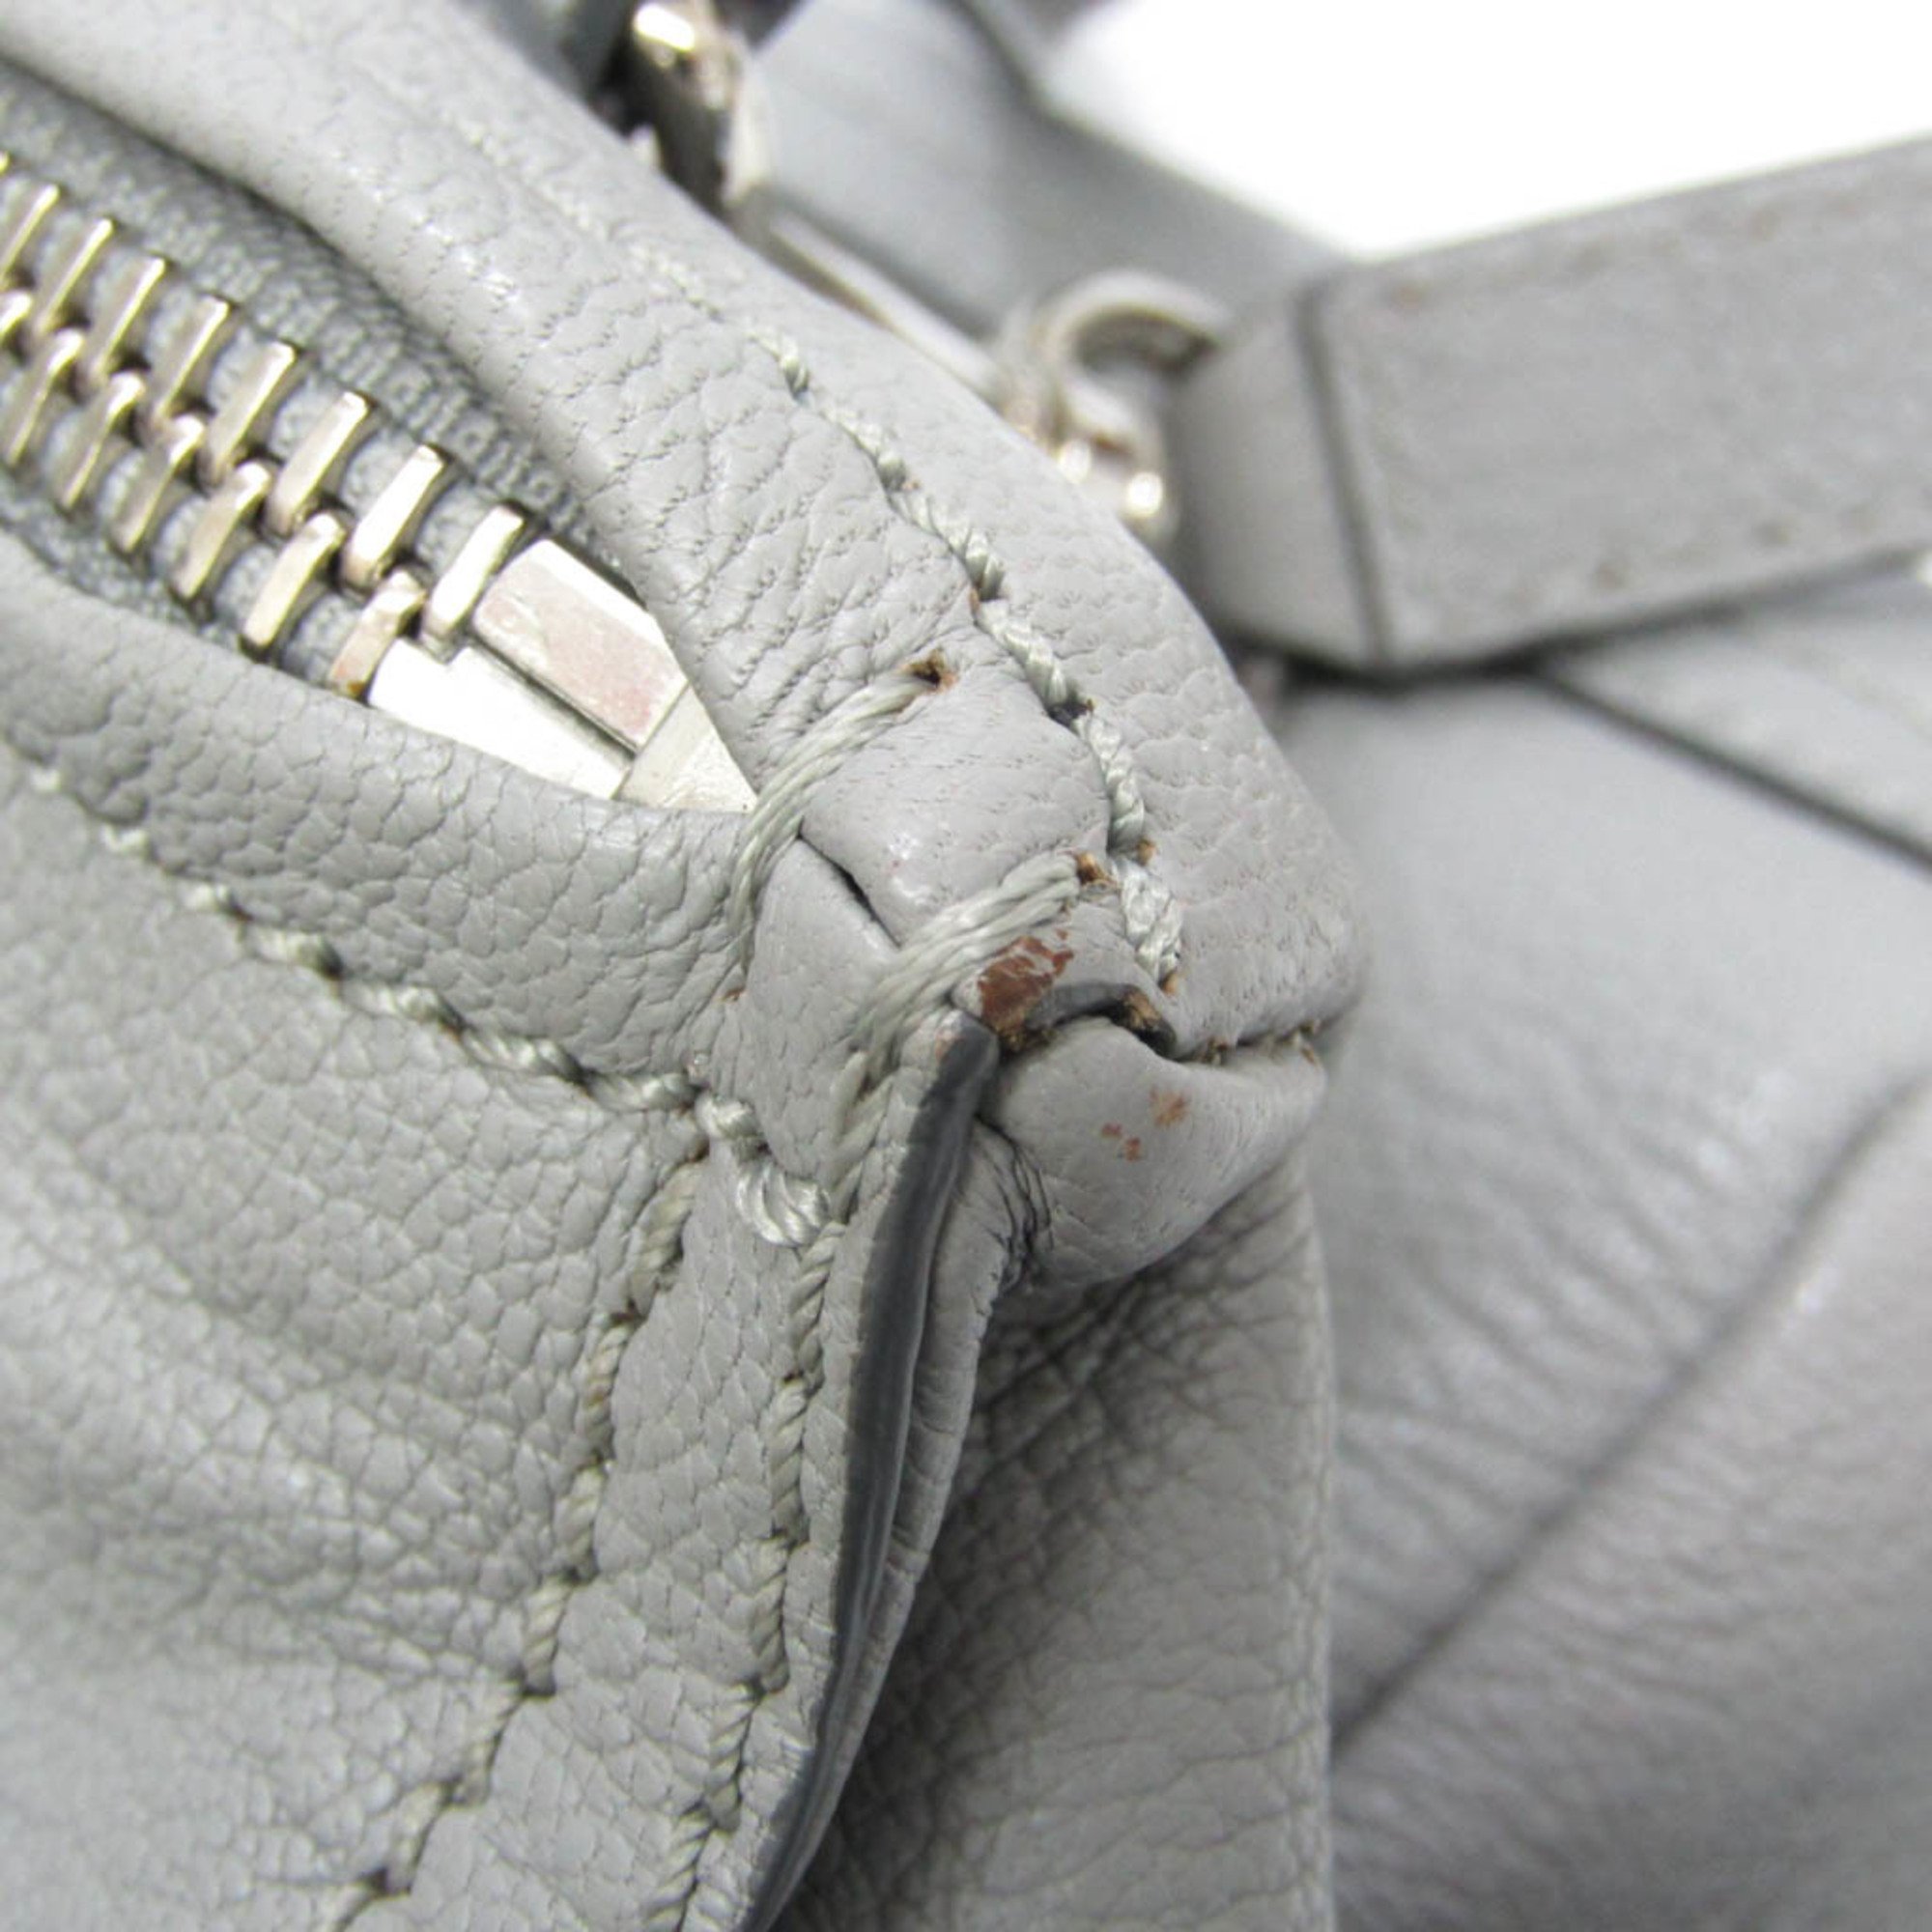 Givenchy Pandora Small BB05251012 Women's Leather Handbag,Shoulder Bag Gray